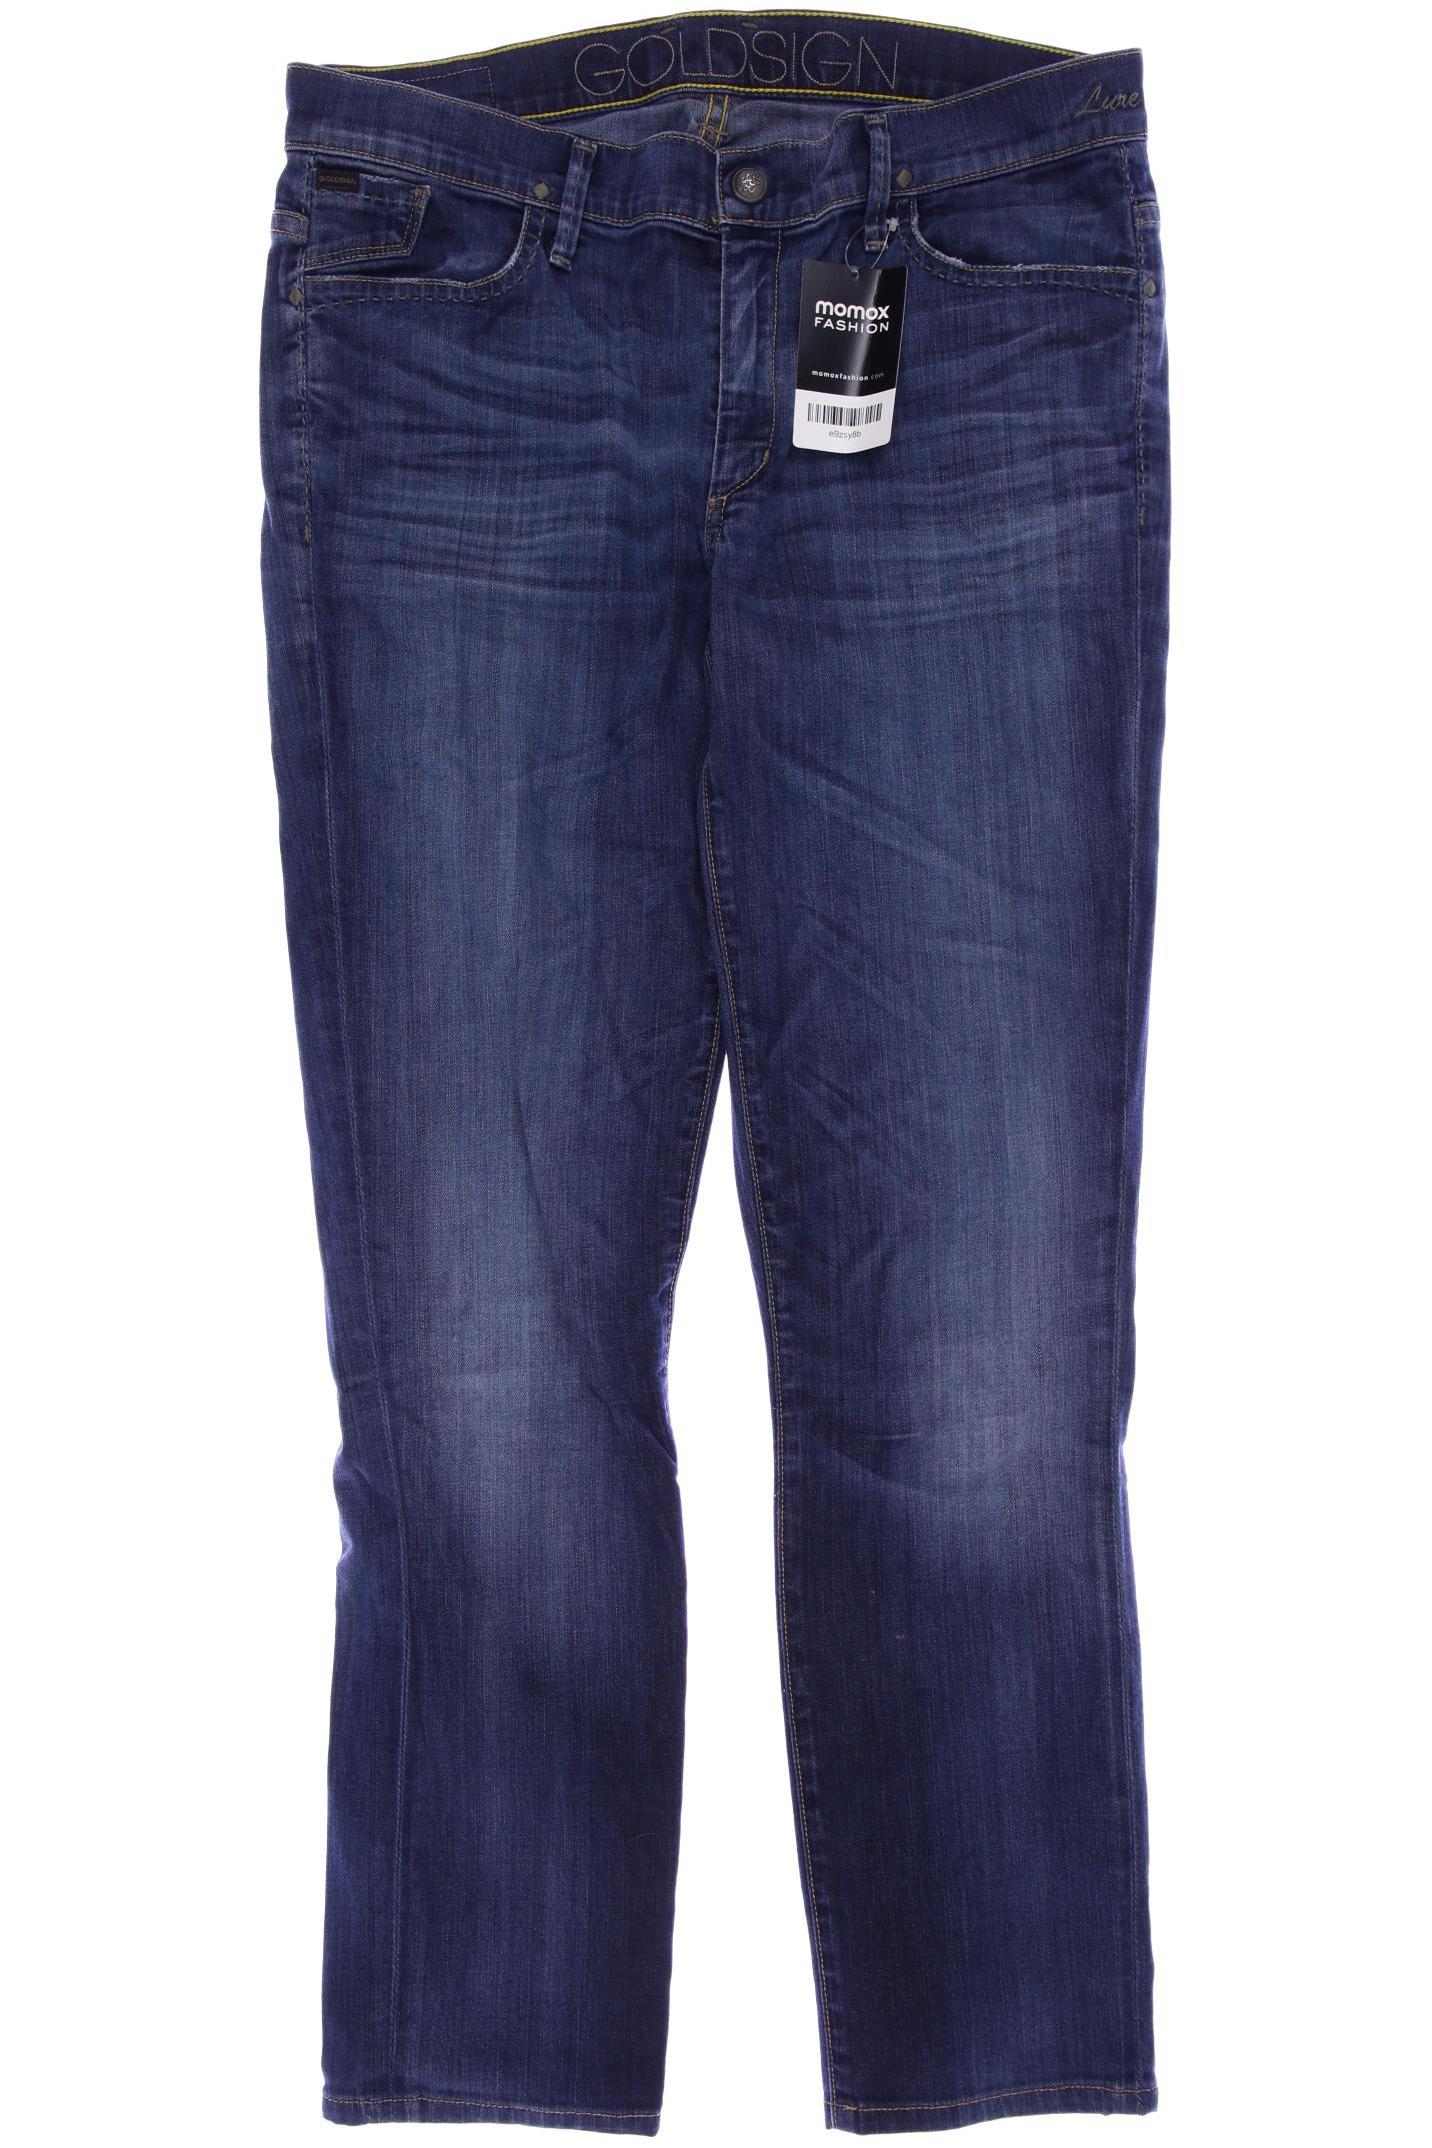 GoldSign Damen Jeans, marineblau, Gr. 42 von GoldSign